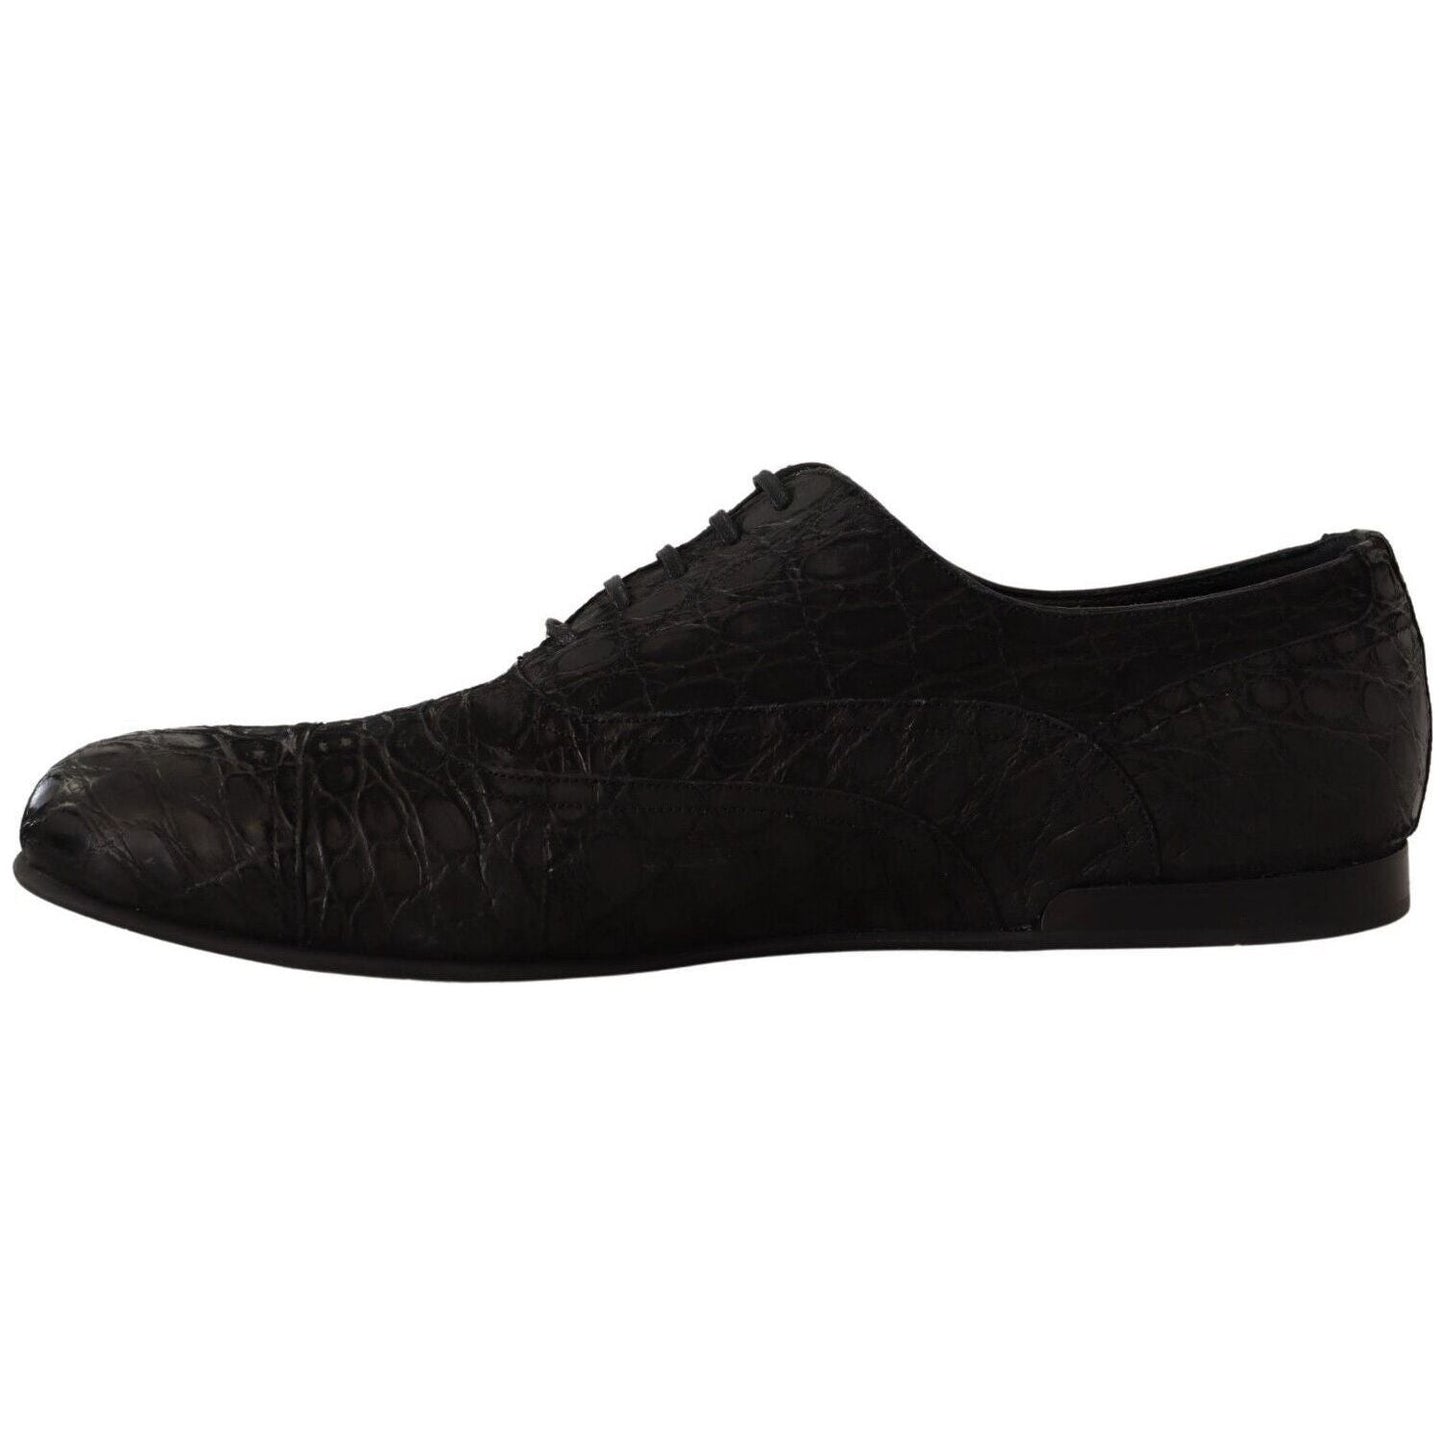 Dolce & Gabbana Elegant Exotic Leather Oxford Shoes black-caiman-leather-mens-oxford-shoes s-l1600-4-71-e65219d6-f24.jpg